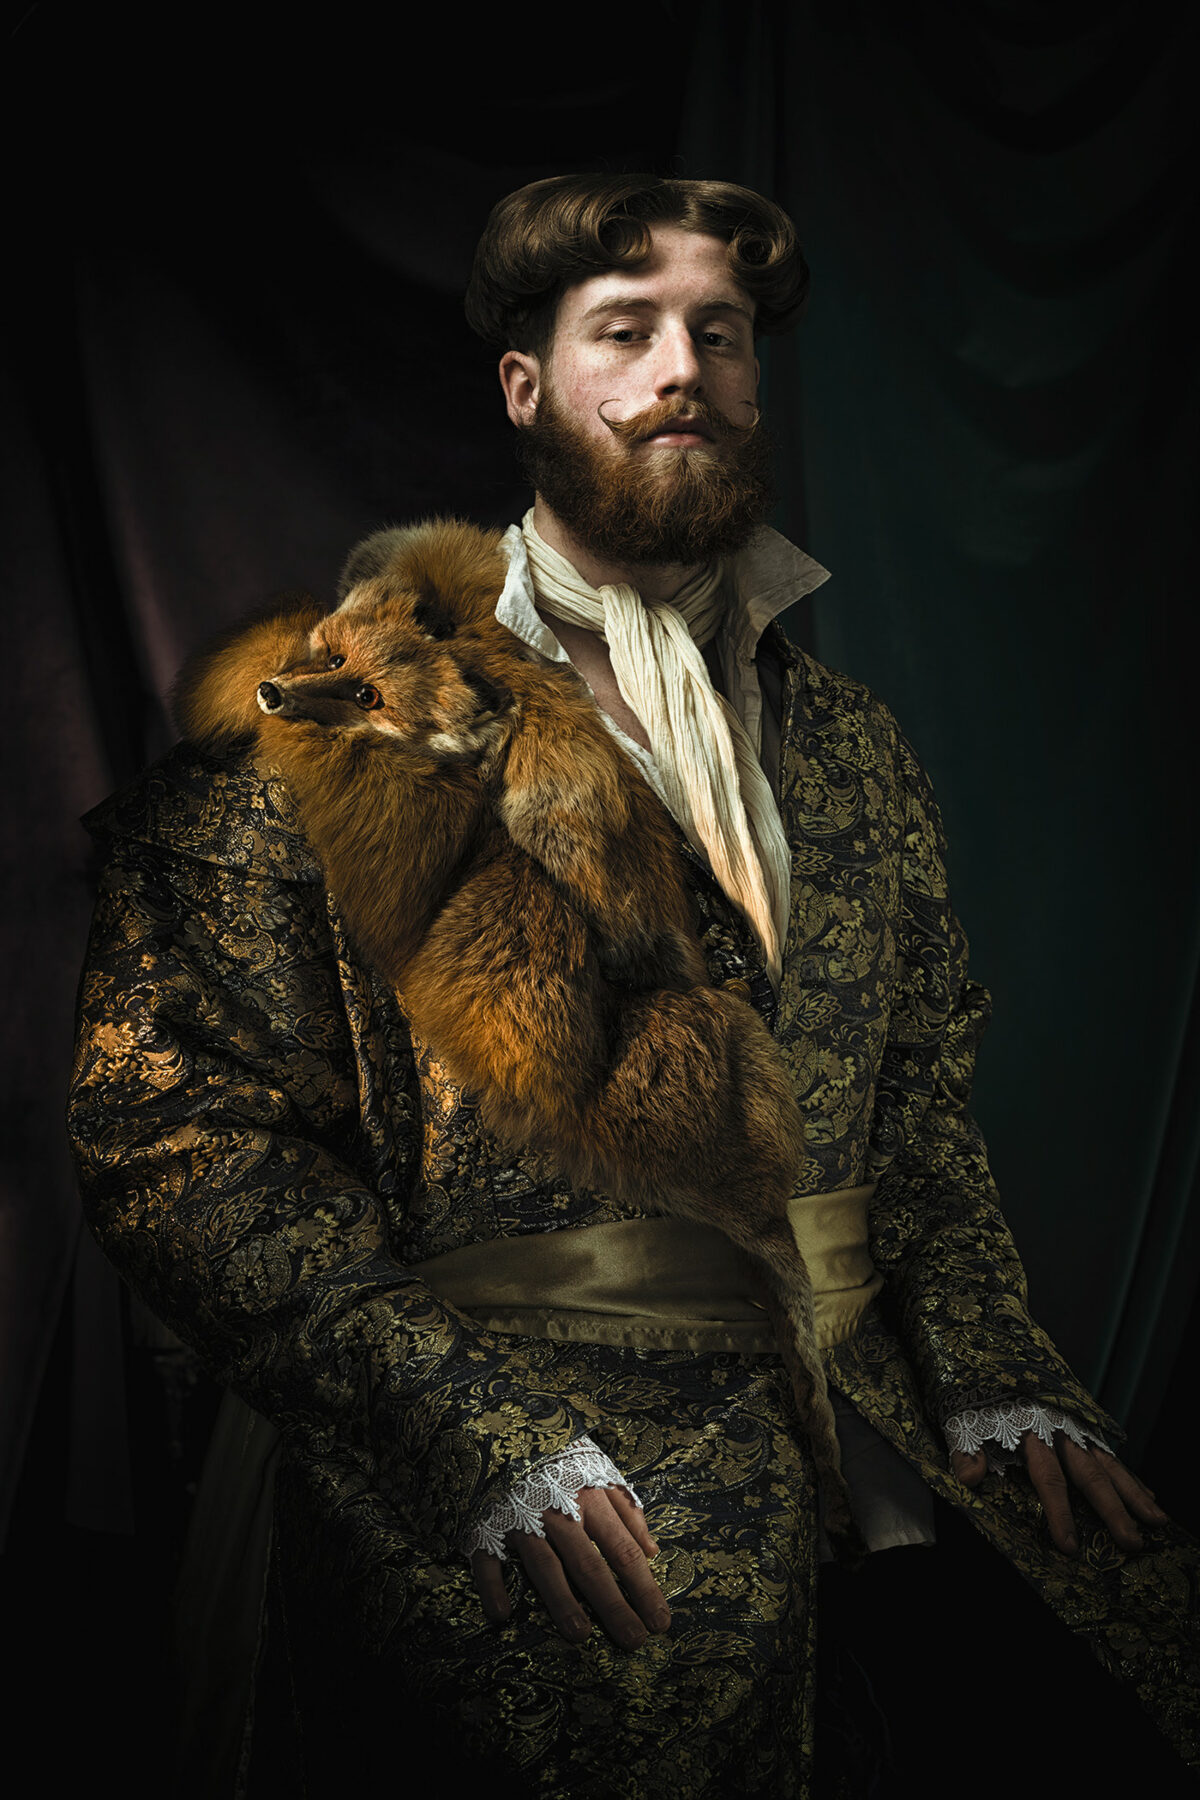 Reuzel A Baroque Like Portrait Photography Series By John Janssen 1